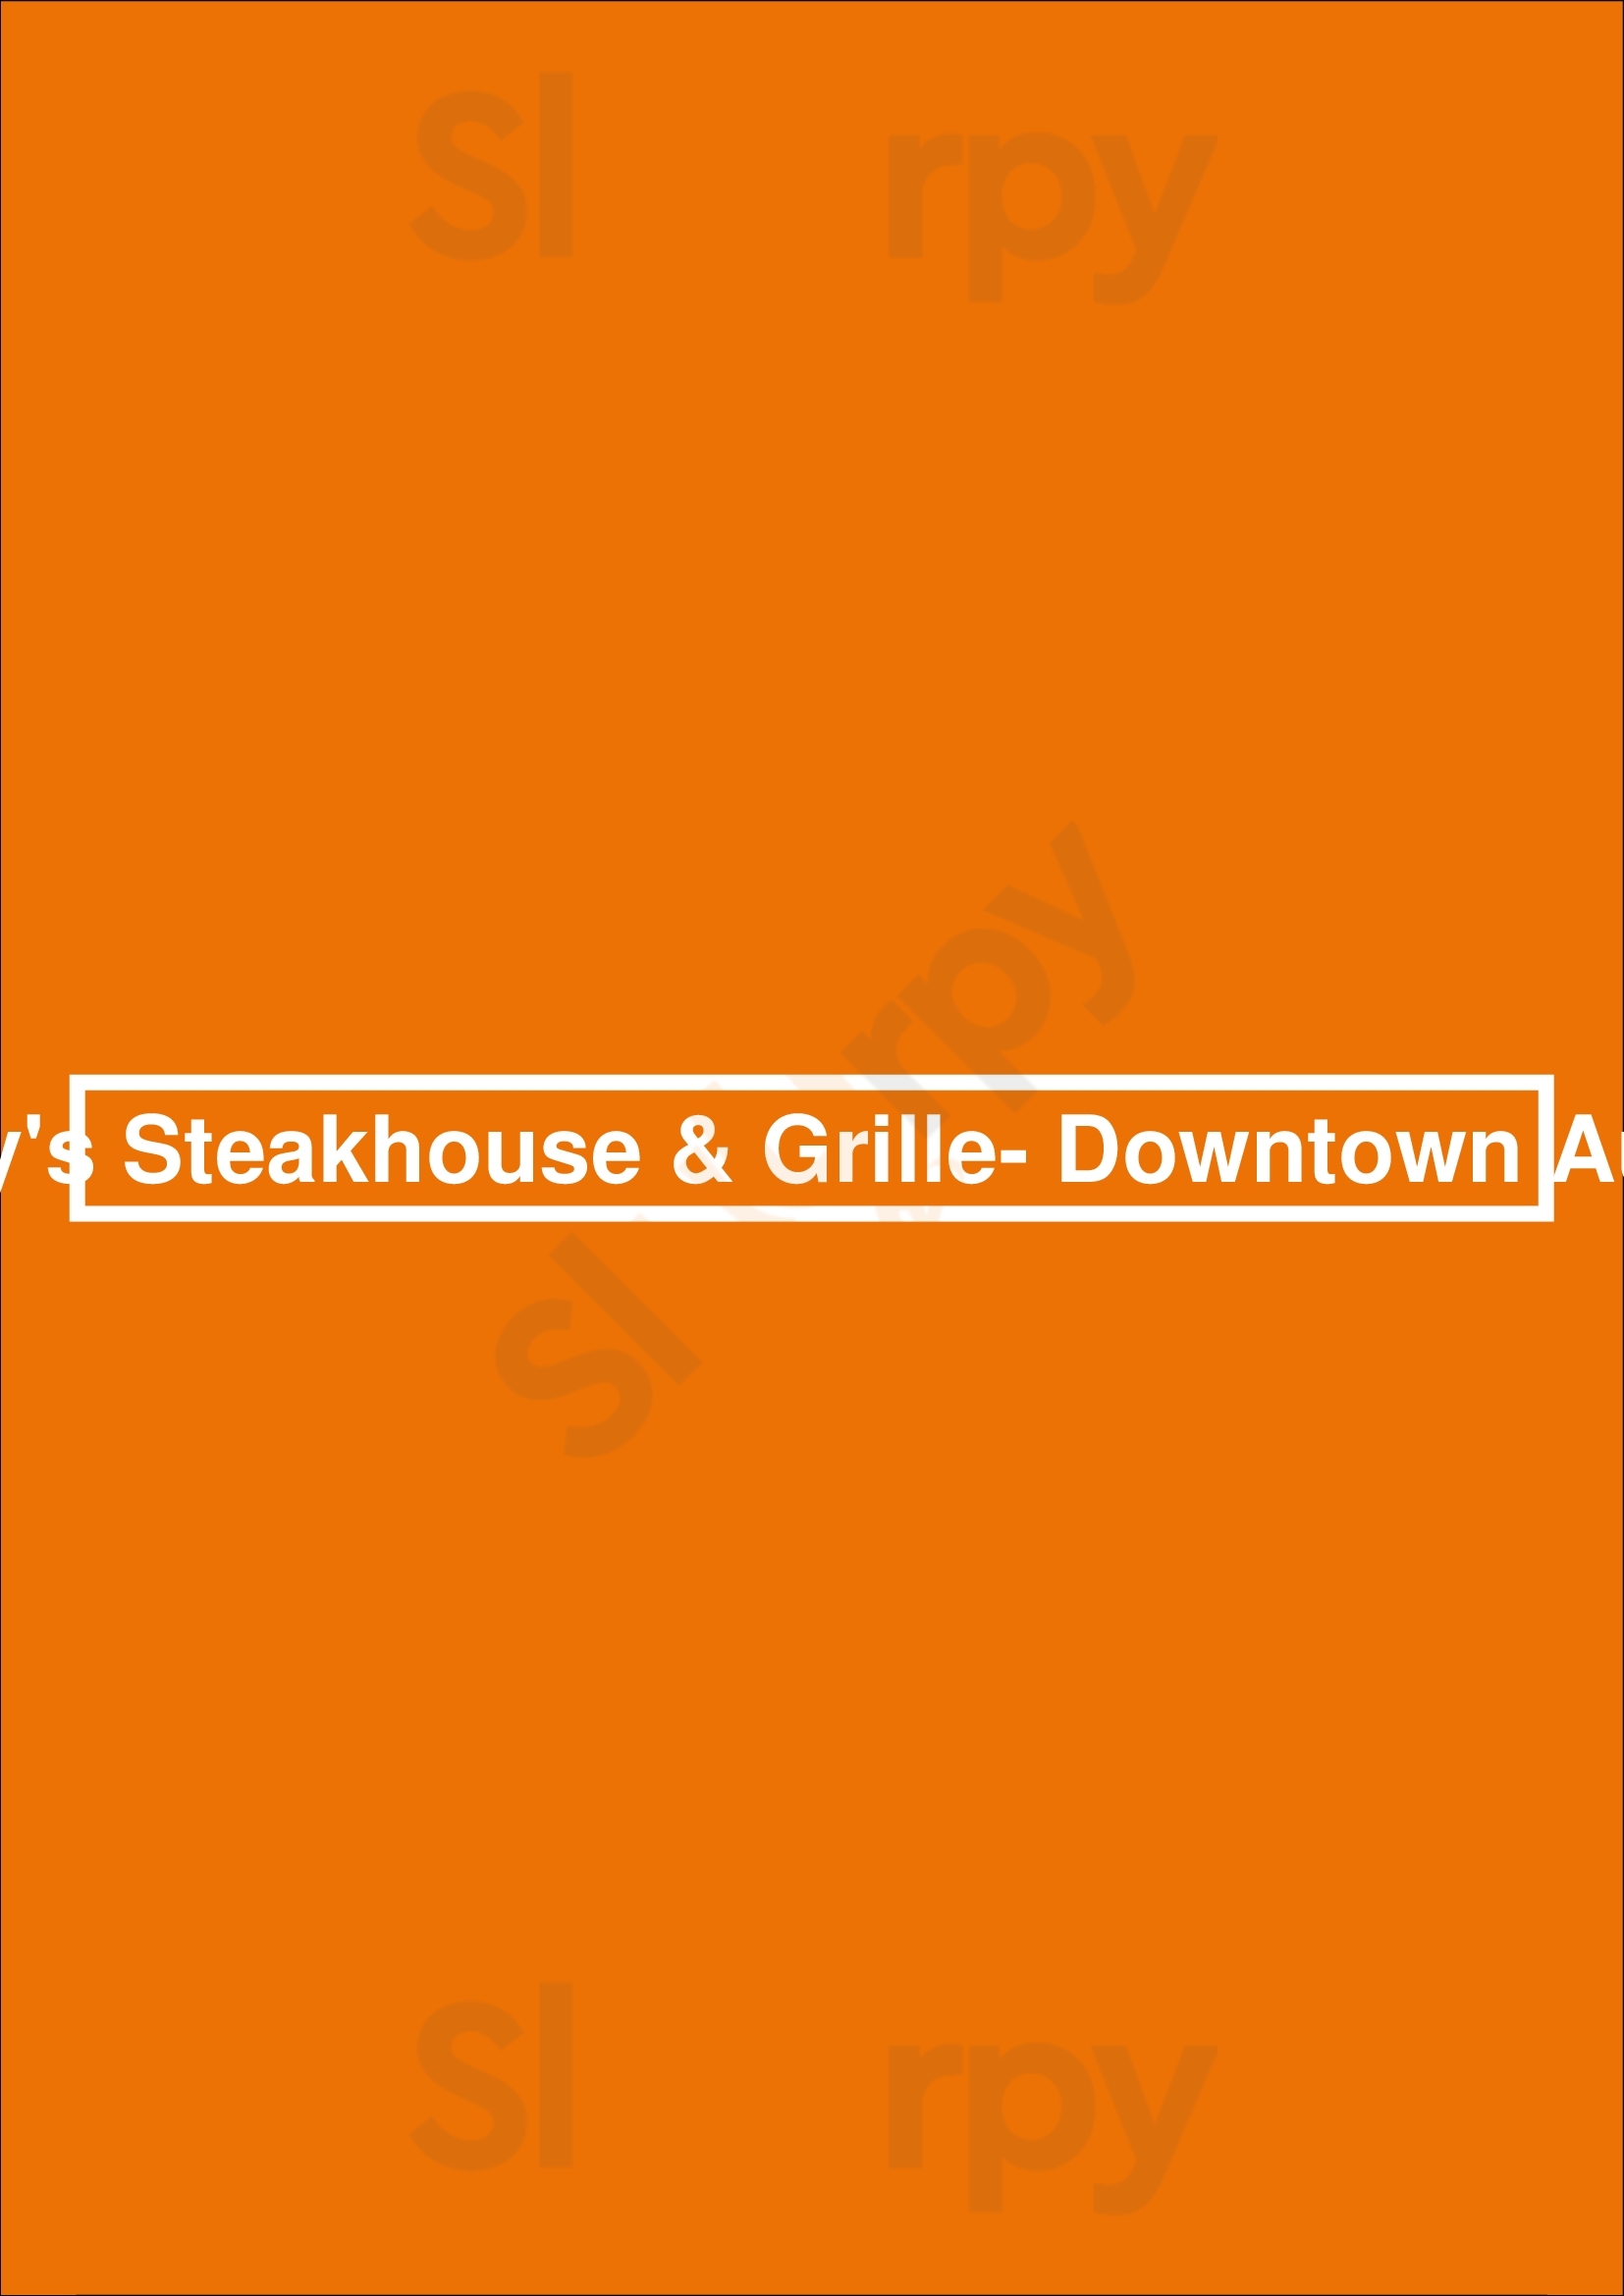 Perry's Steakhouse & Grille- Downtown Austin Austin Menu - 1